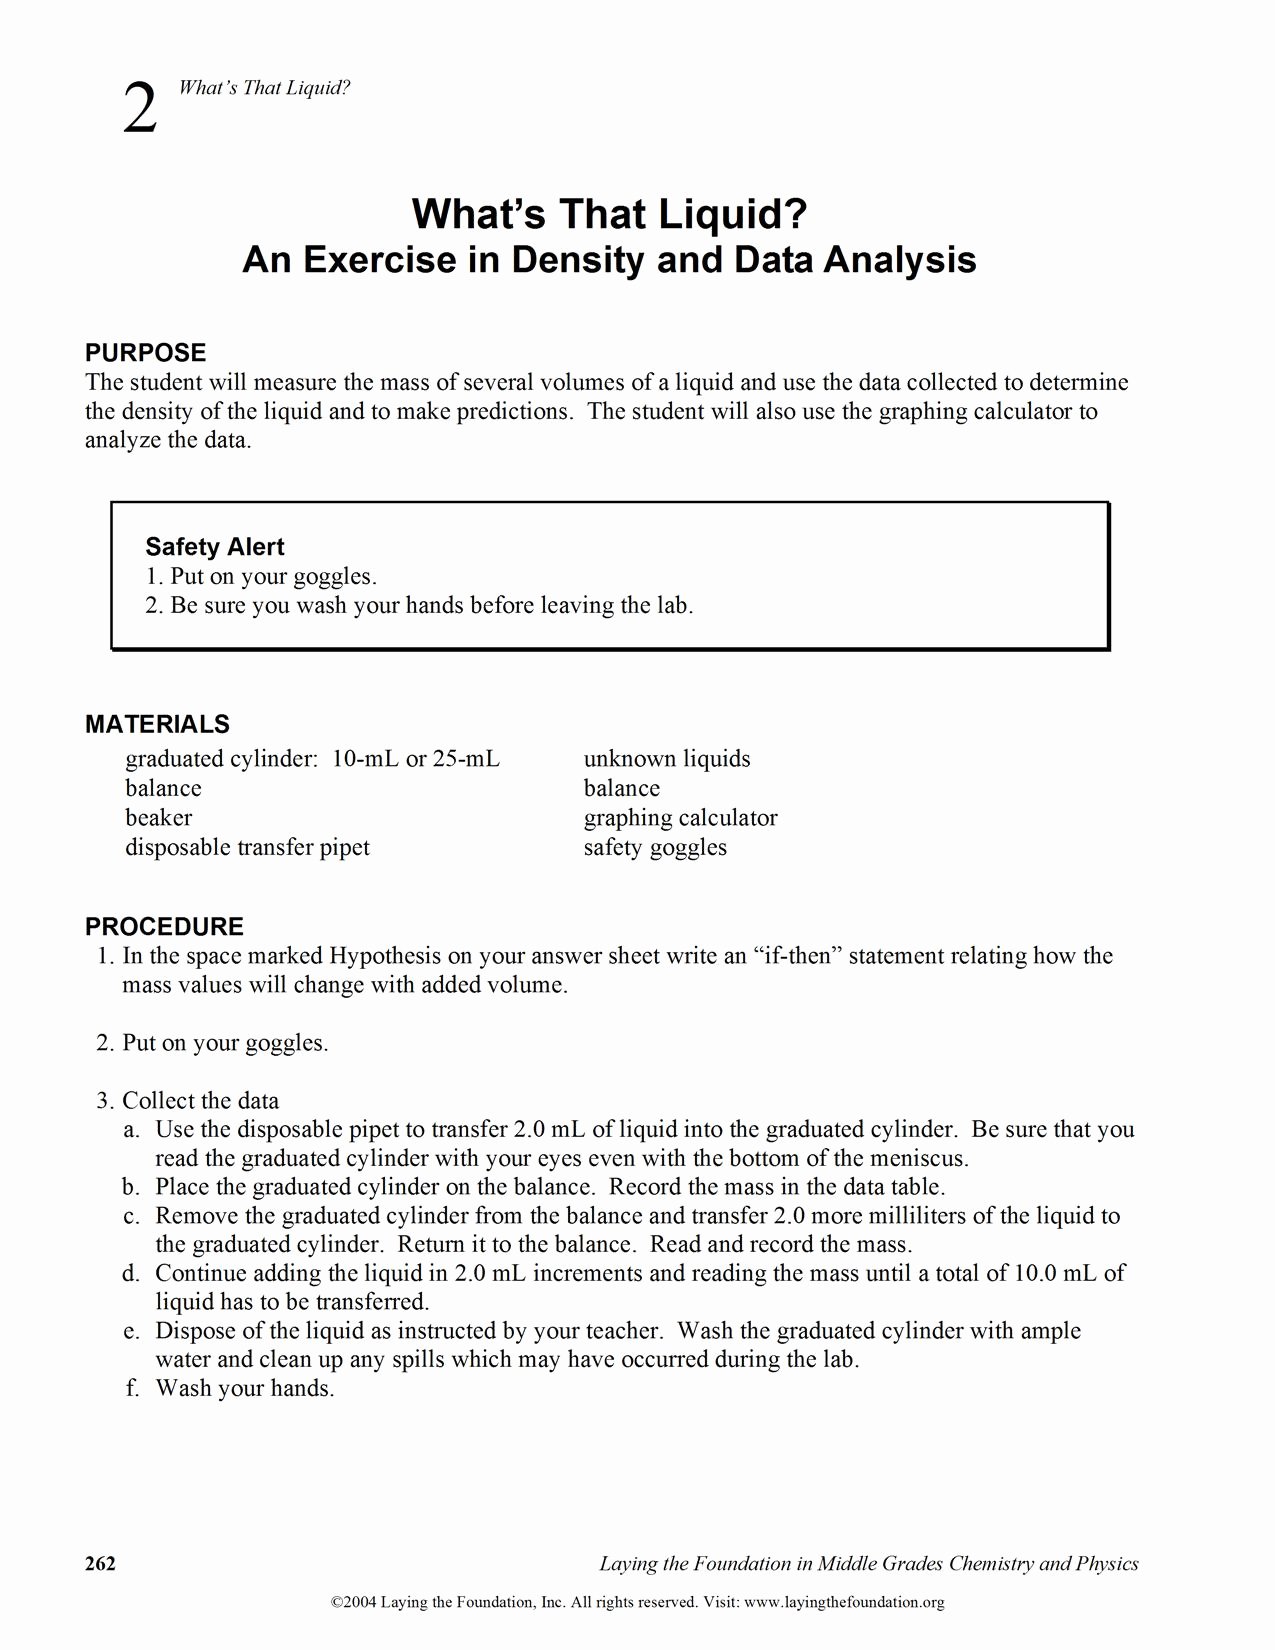 Scientific Method Review Worksheet Answers Fresh Scientific Method Worksheet 1 Graphing Practice Answers